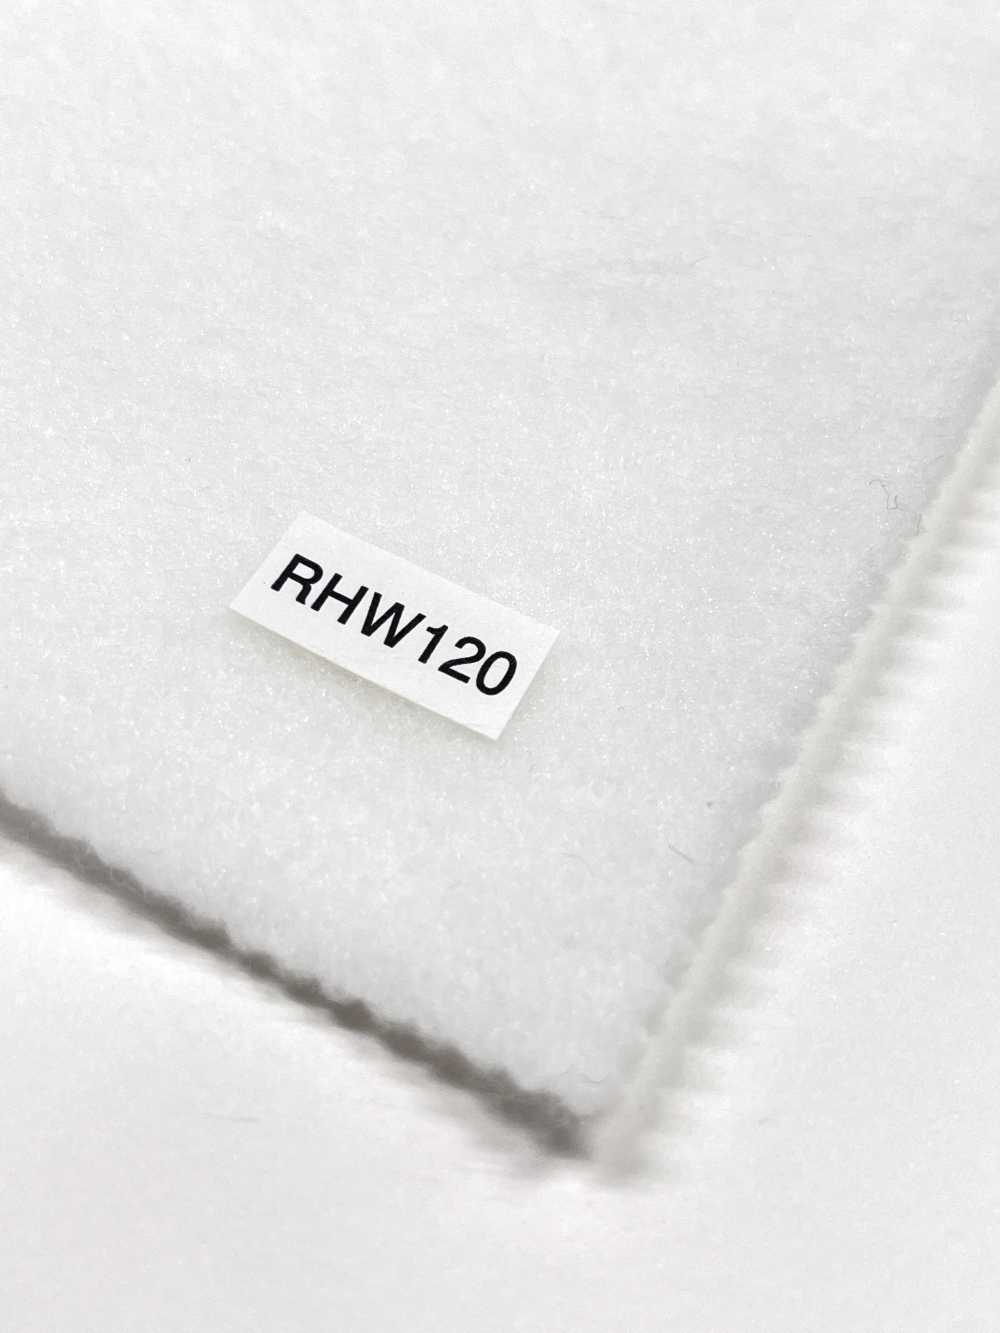 RHW120 Conbel<コンベル> NOWVEN(R) ドミットシリーズ 接着芯 ソフトタイプ[芯地] Conbel(コンベル)